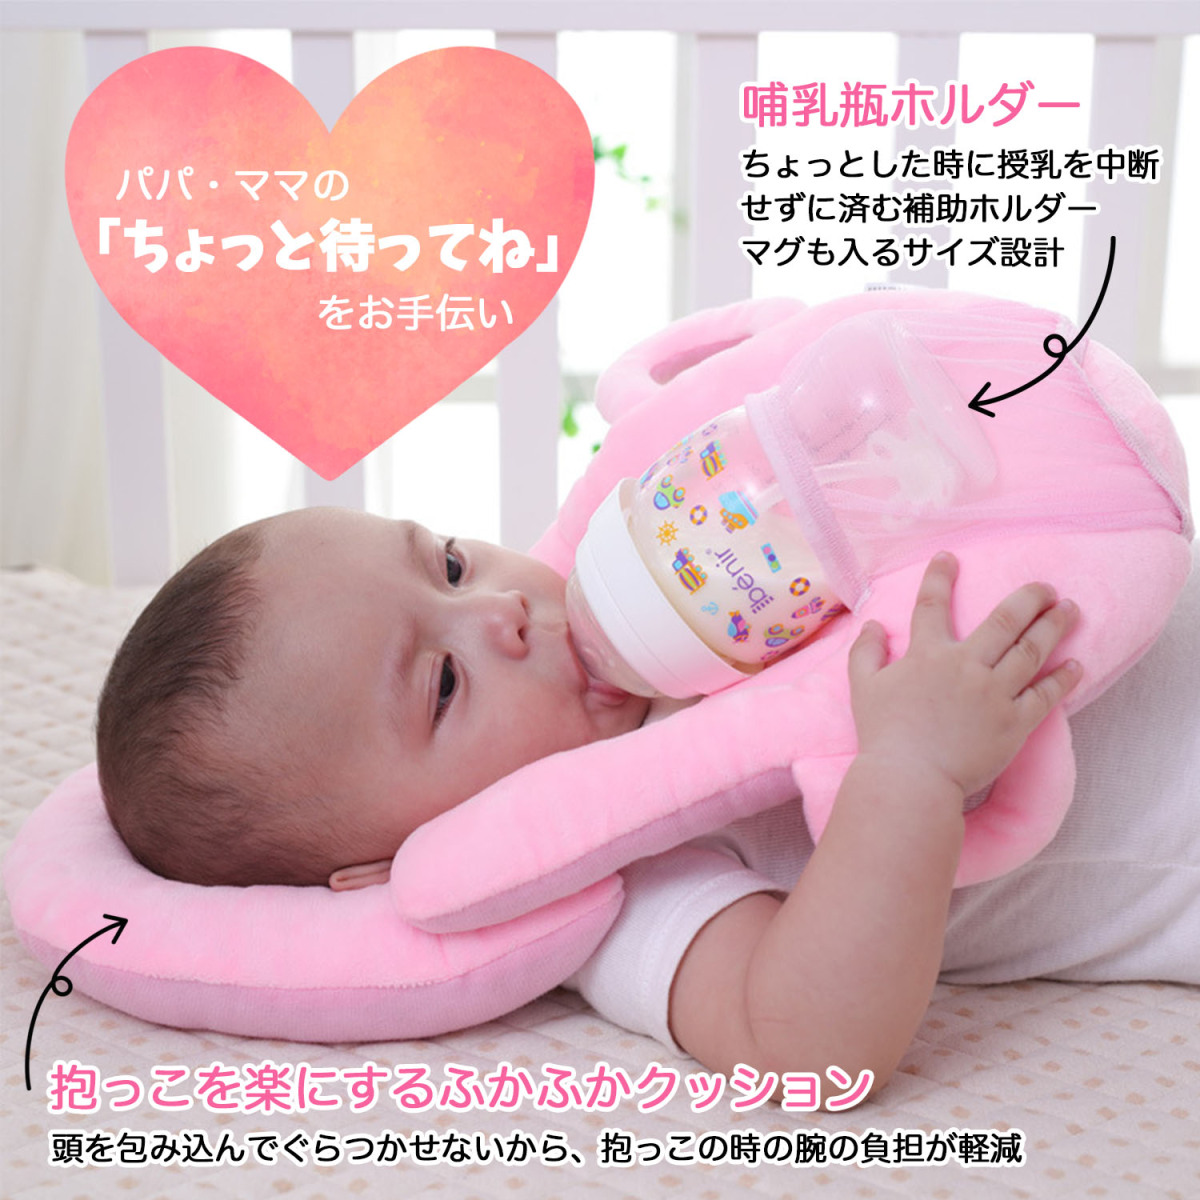  baby nursing cushion baby nursing cushion pillow pillow hands free feeding bottle holder baby ... baby .../ nursing cushion 